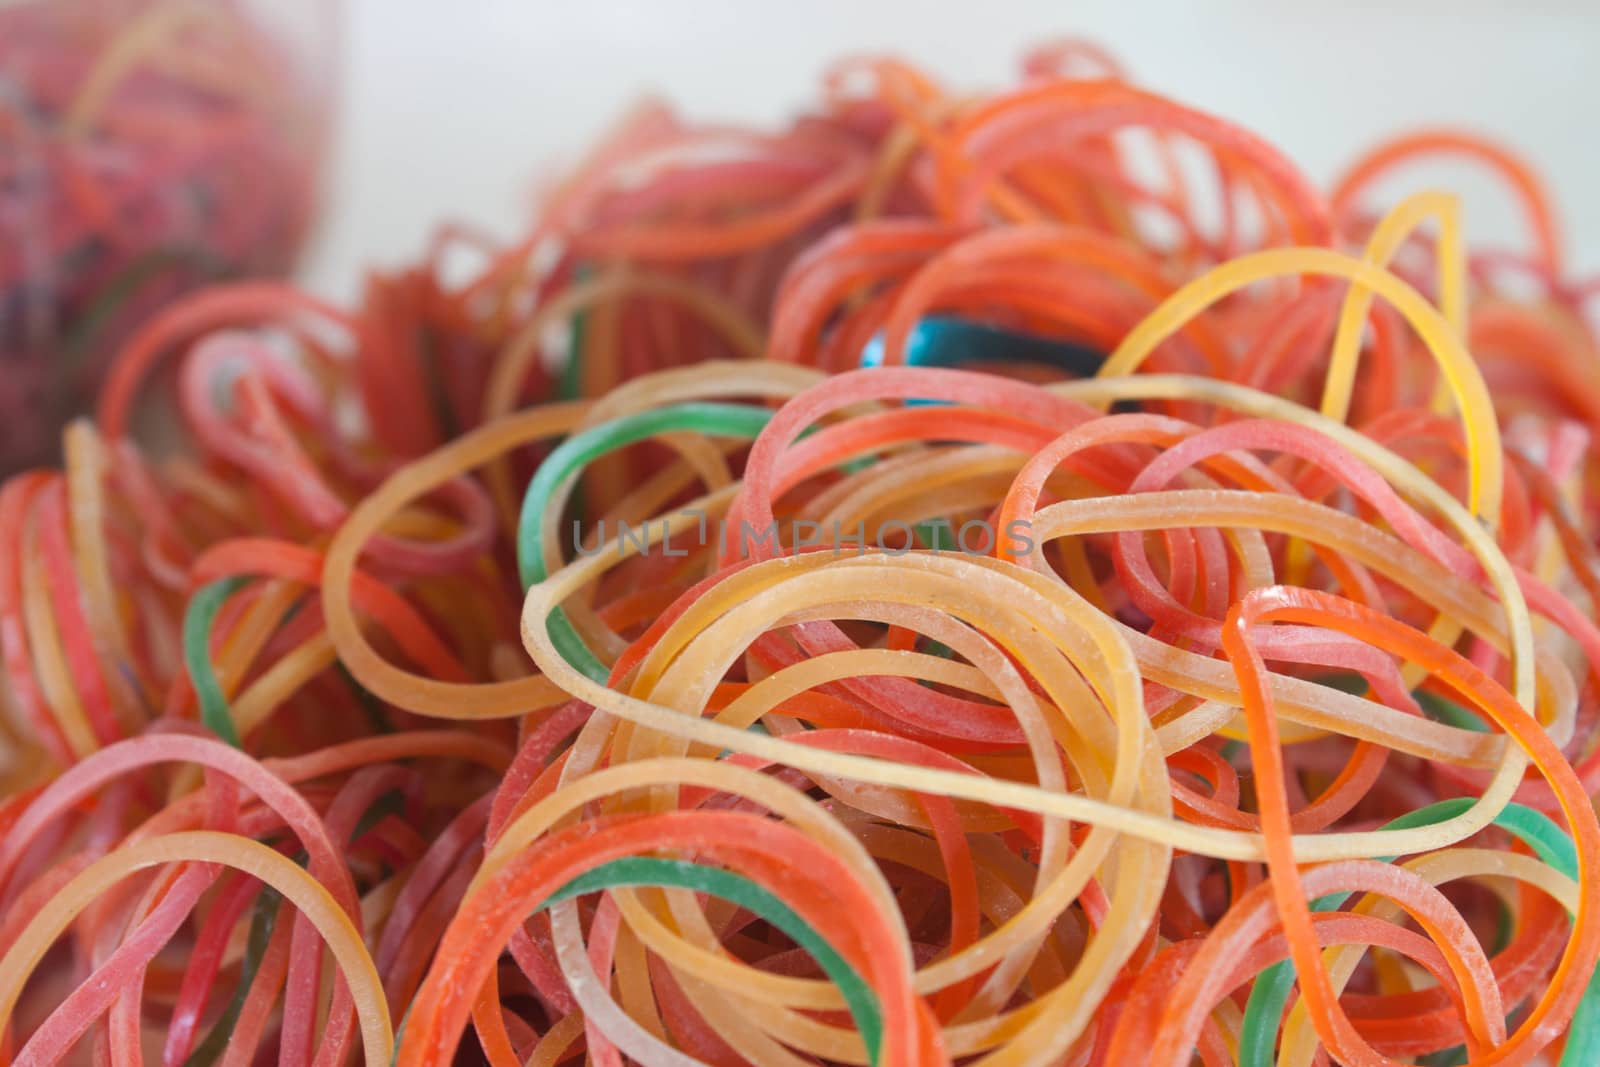 Multi-colored rubber bands The spools